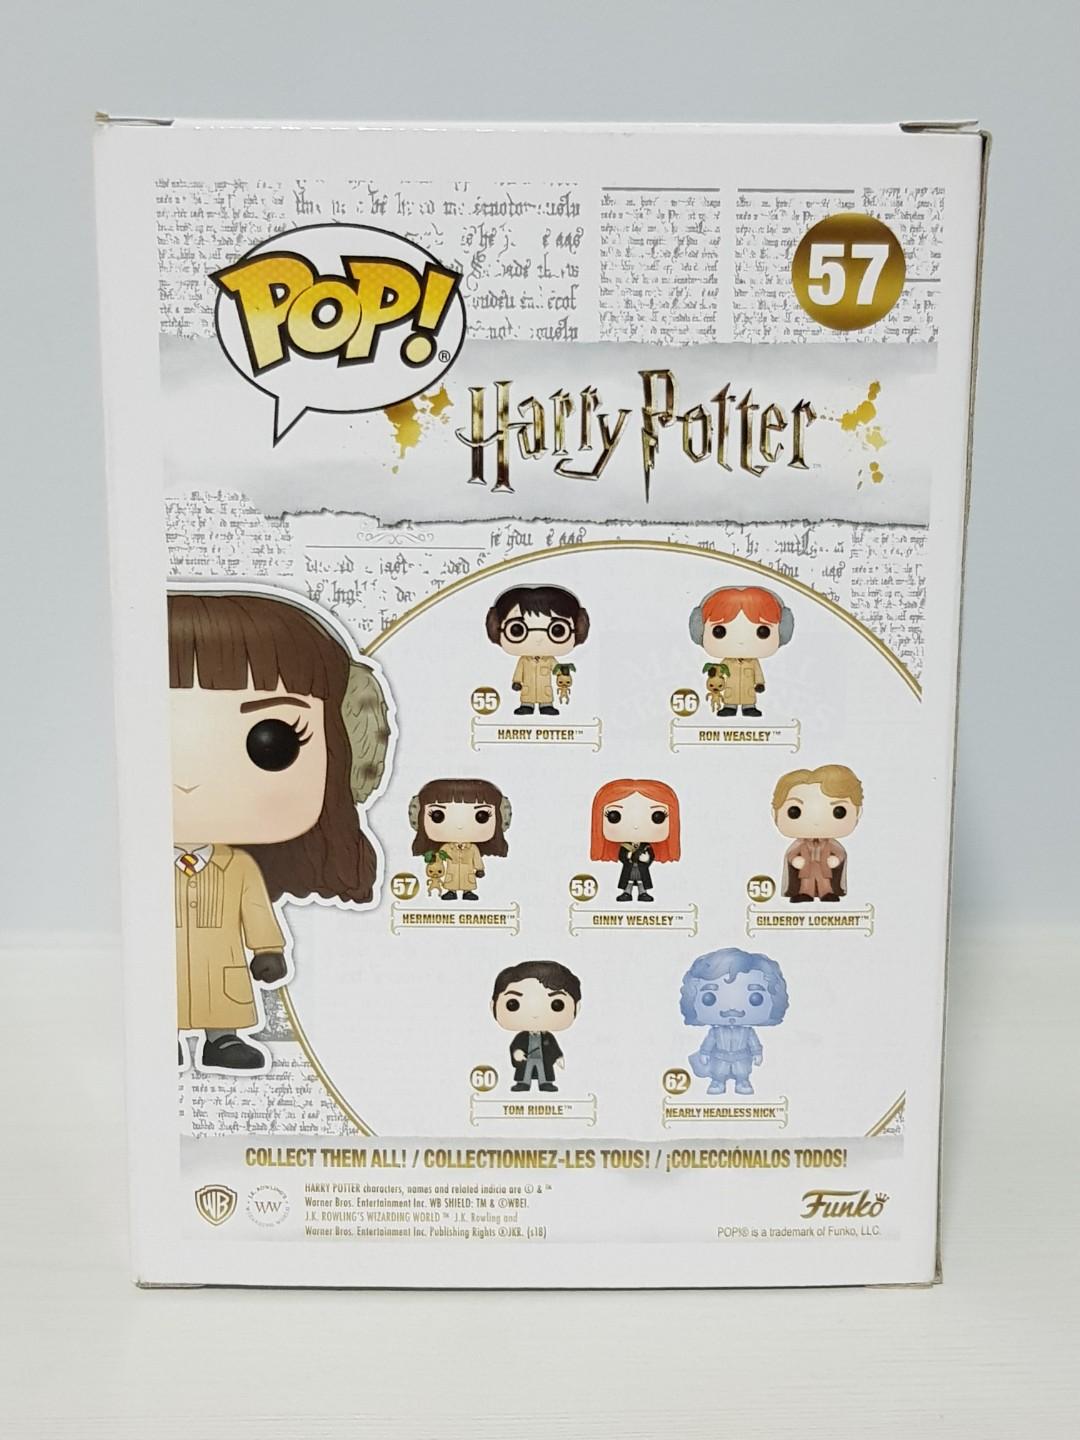 Harry Potter - Hermione Granger (Herbology) Pop – Dragons Trading